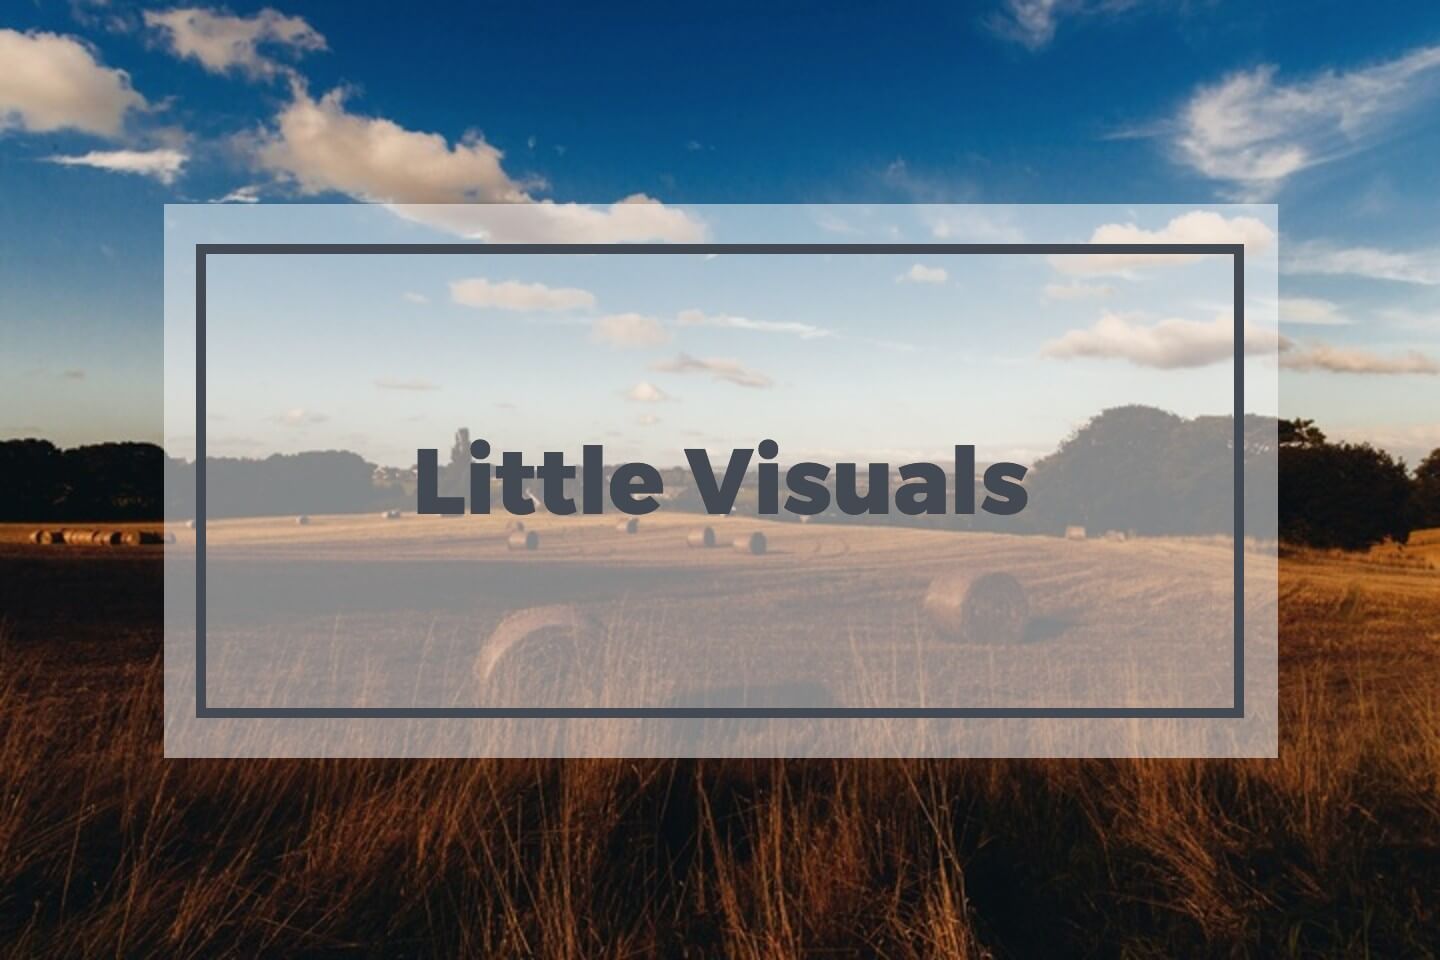 Little Visuals free stock photos